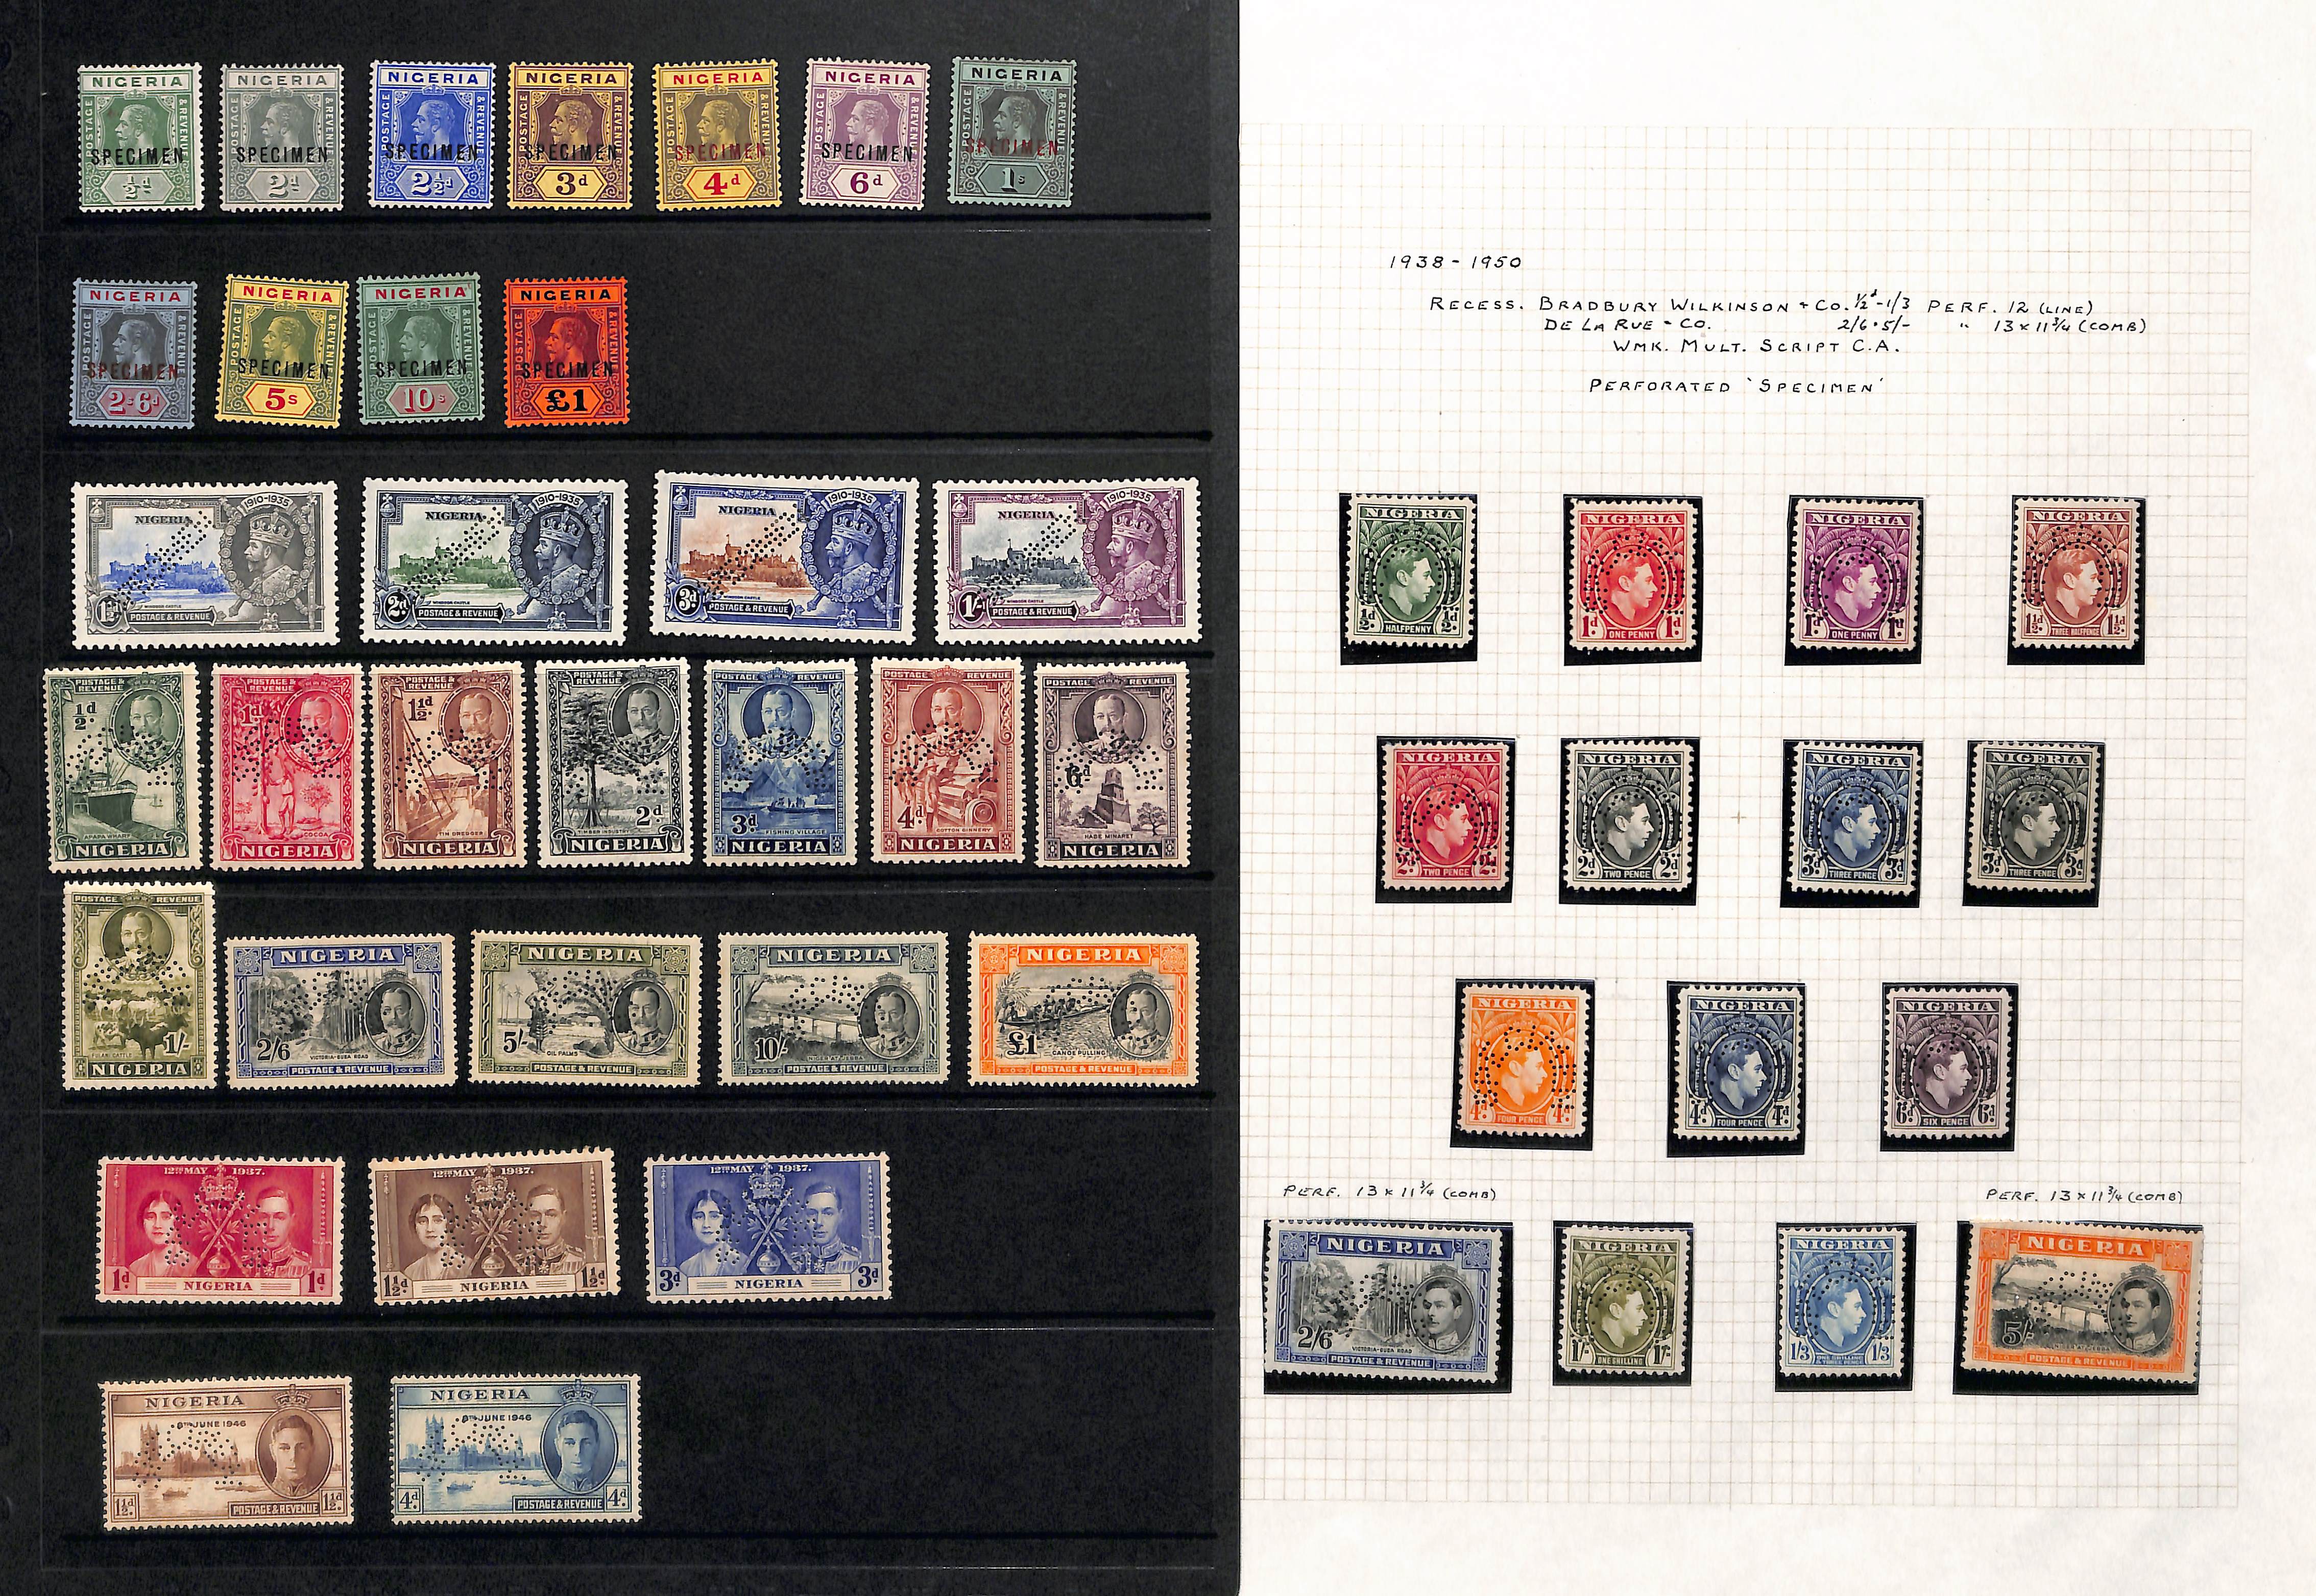 1914-46 Specimen sets comprising 1914-29 ½d - £1 (no 1d), 1935 Silver Jubilee set, 1936 ½d - £1